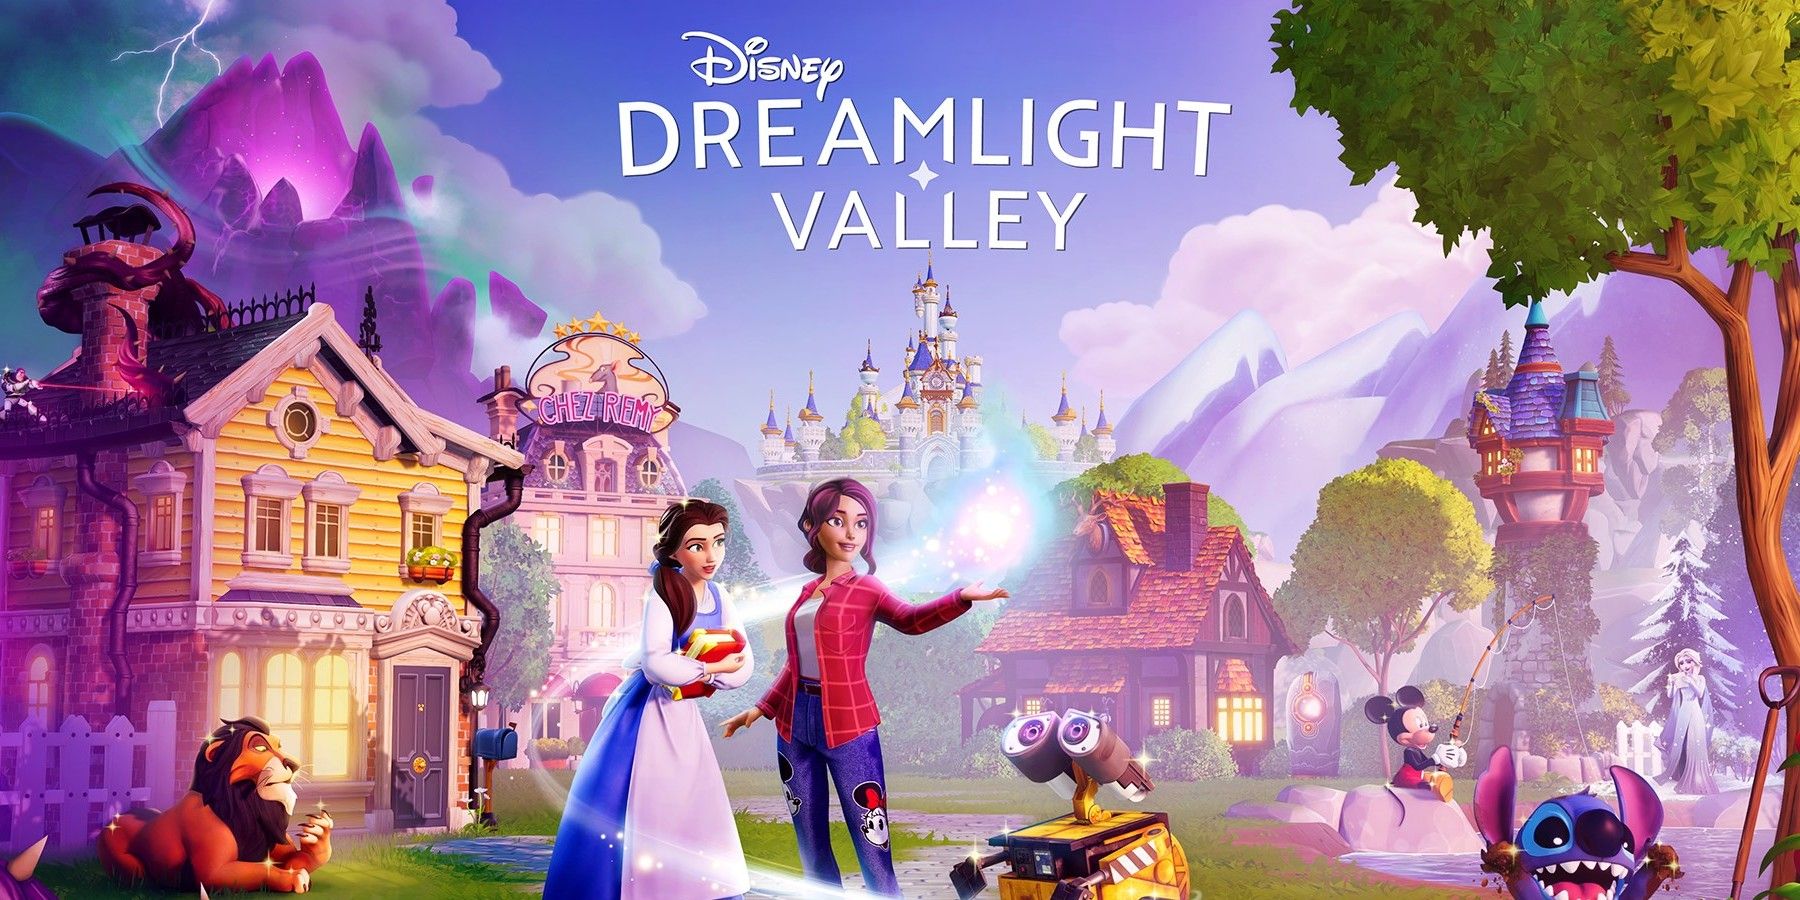 disney valley of light title image